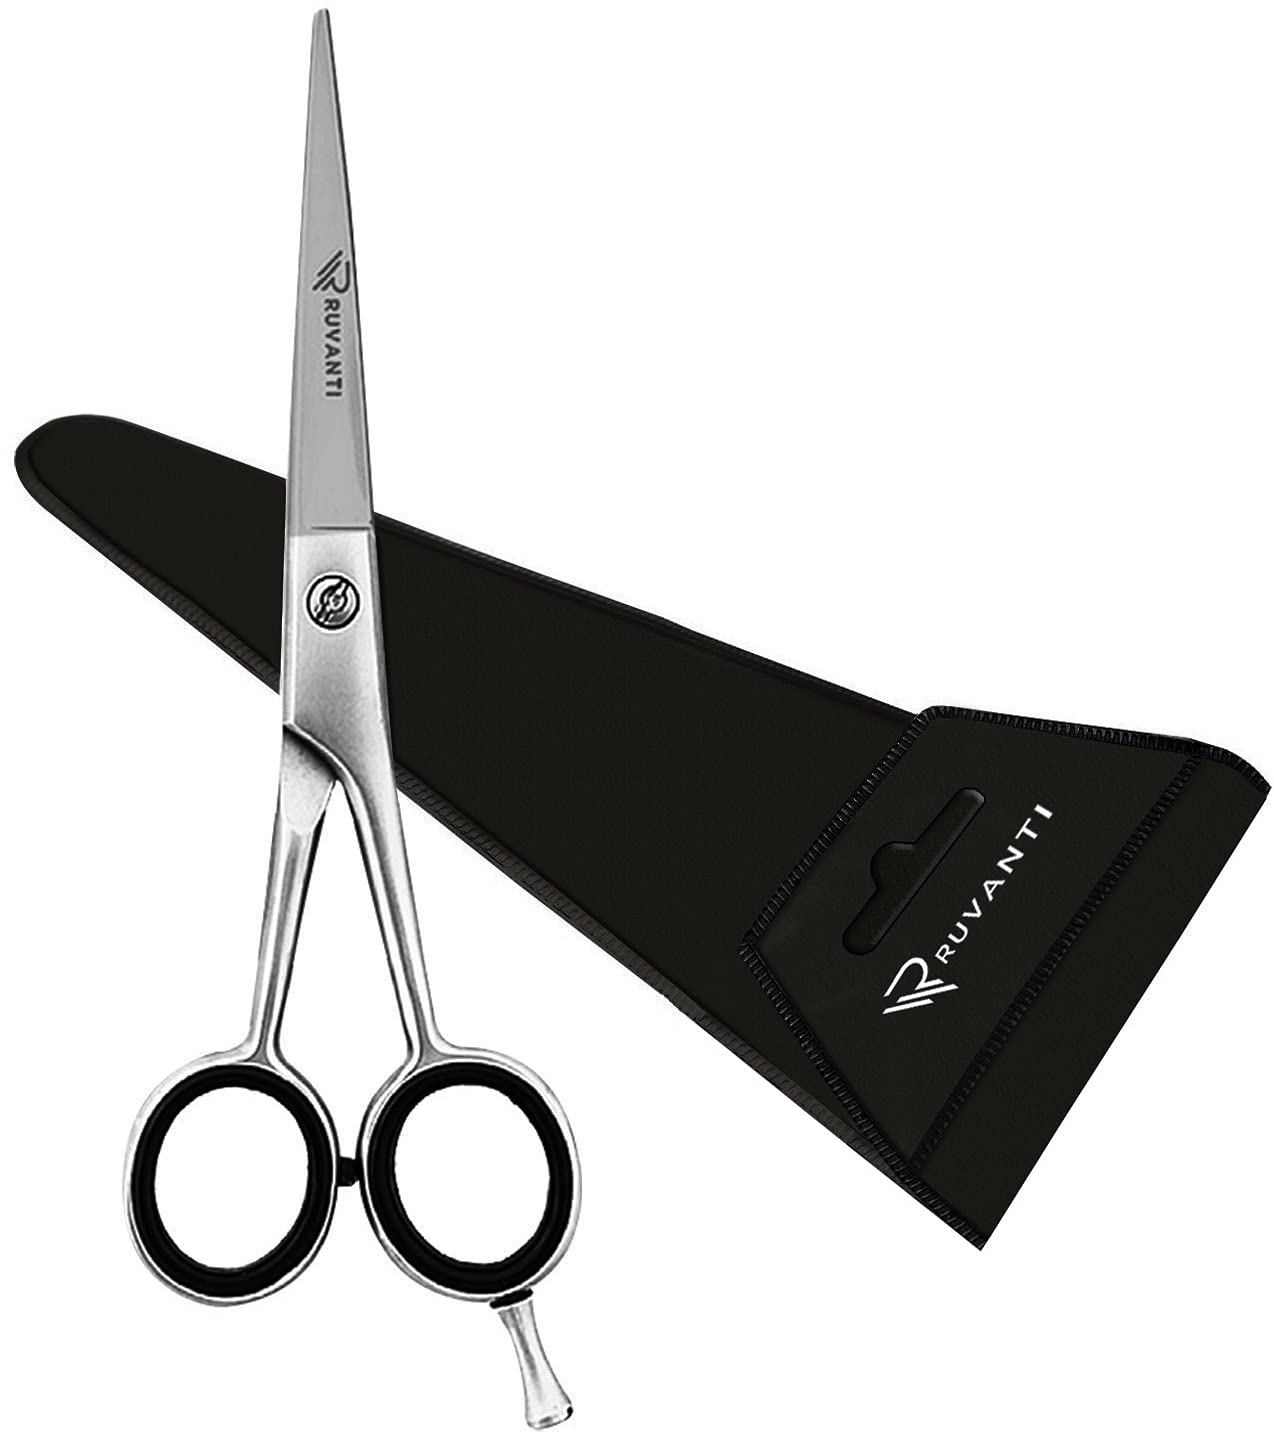 Professional Hair Cutting Scissors - Barber Shears for Salon and Home Use - Sharp Durable Razor Edge Tijeras De Peluqueria Profesional - Comfortable Grip Handles with Case by Ruvanti